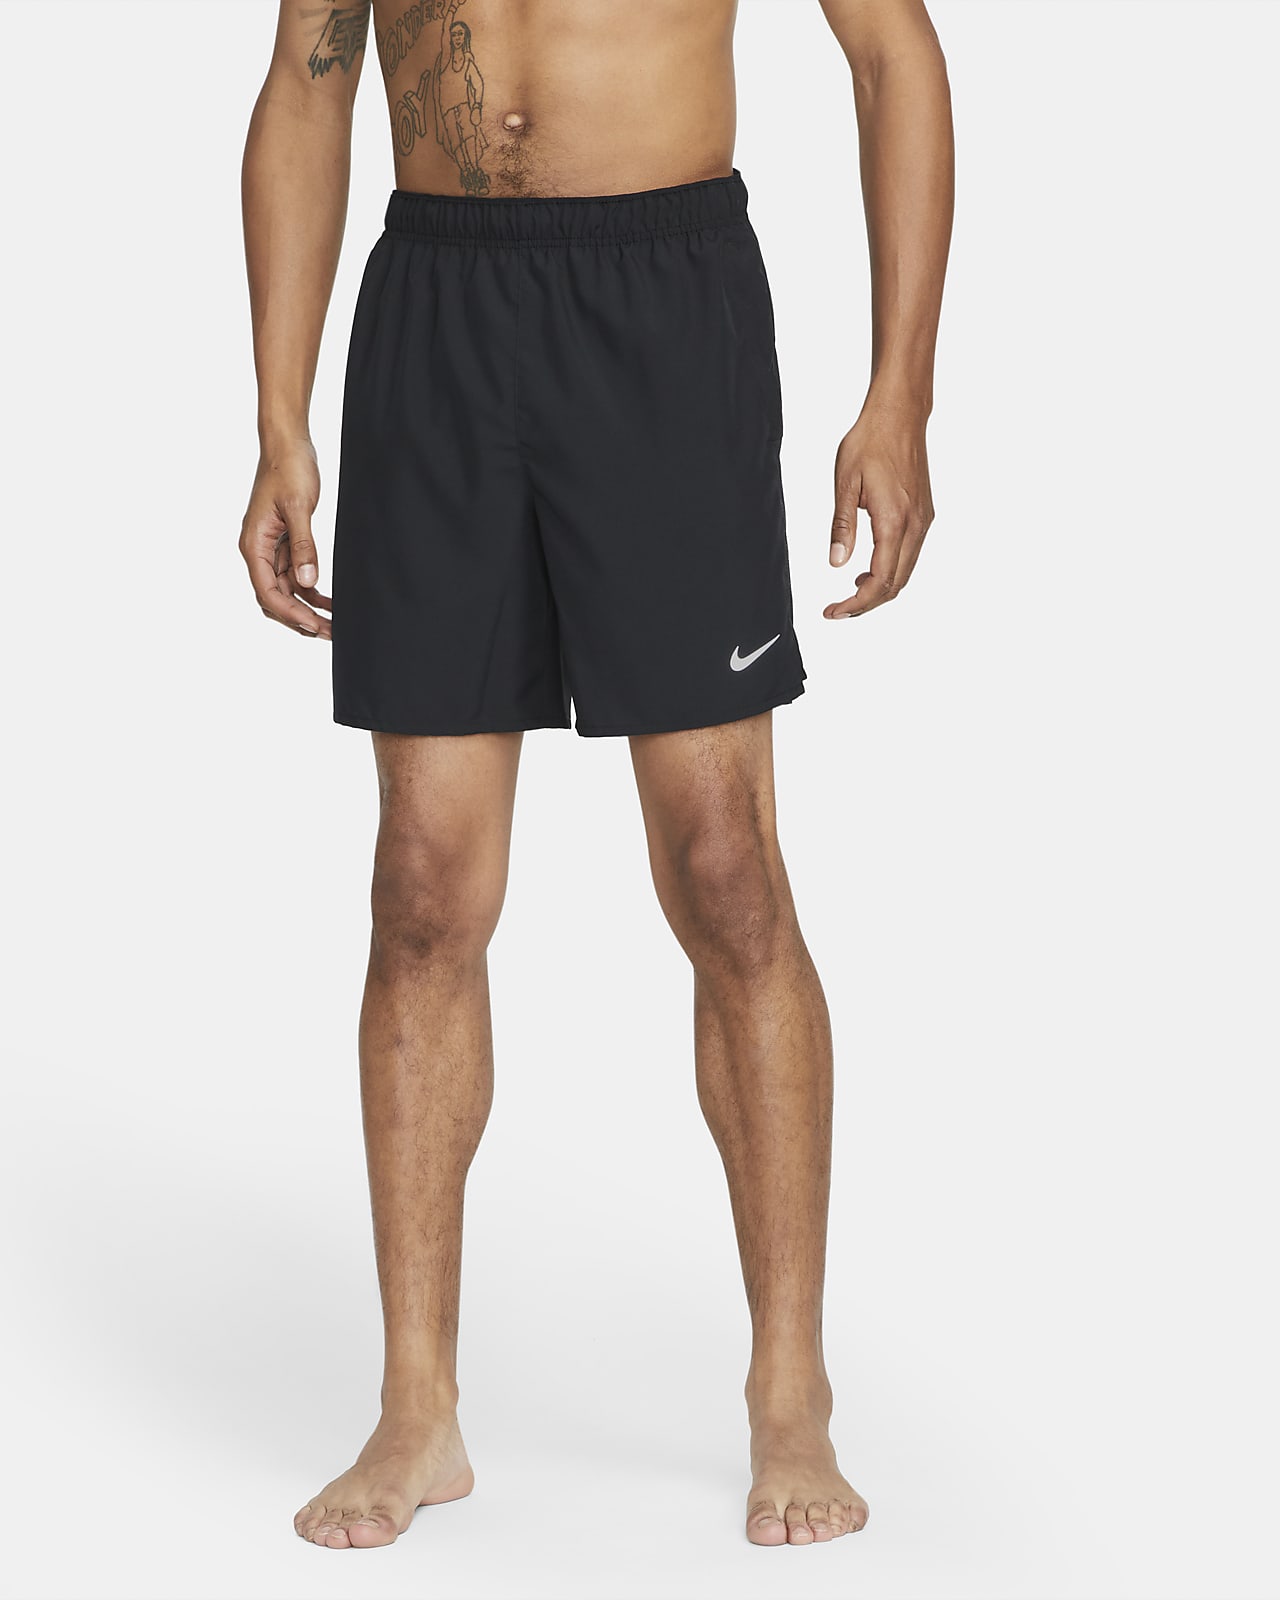 Shorts da running Dri-FIT non foderati 18 cm Nike Challenger – Uomo